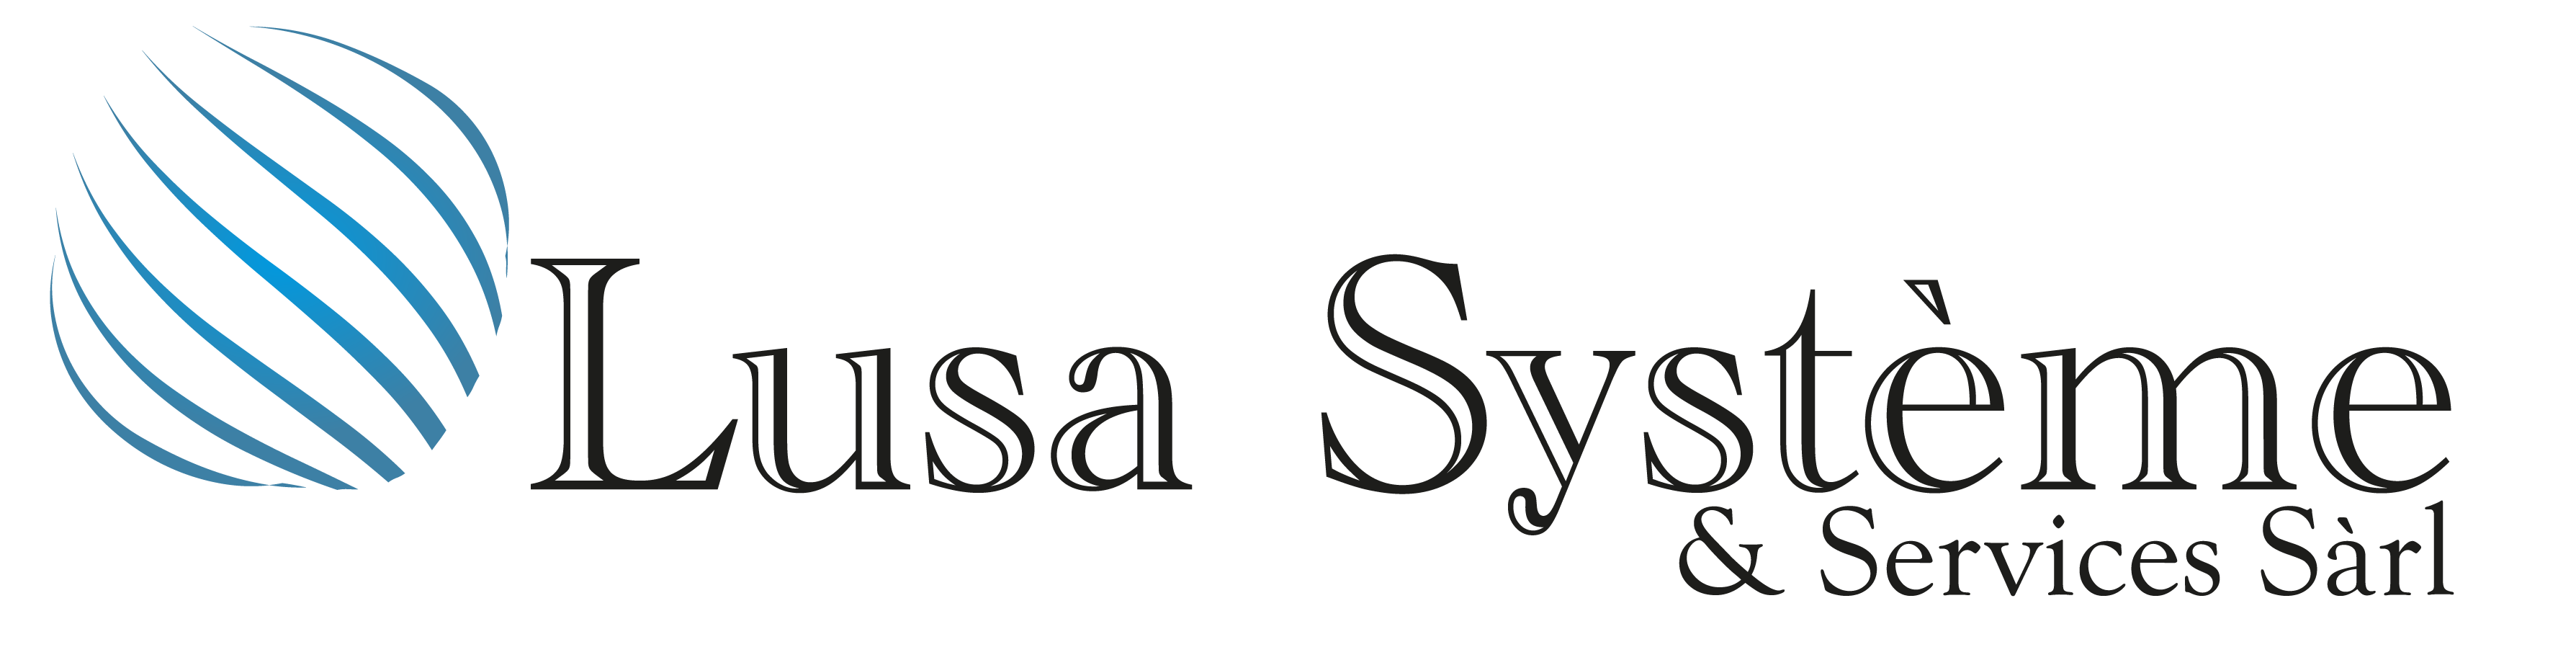 Lusa Système & Services Sàrl